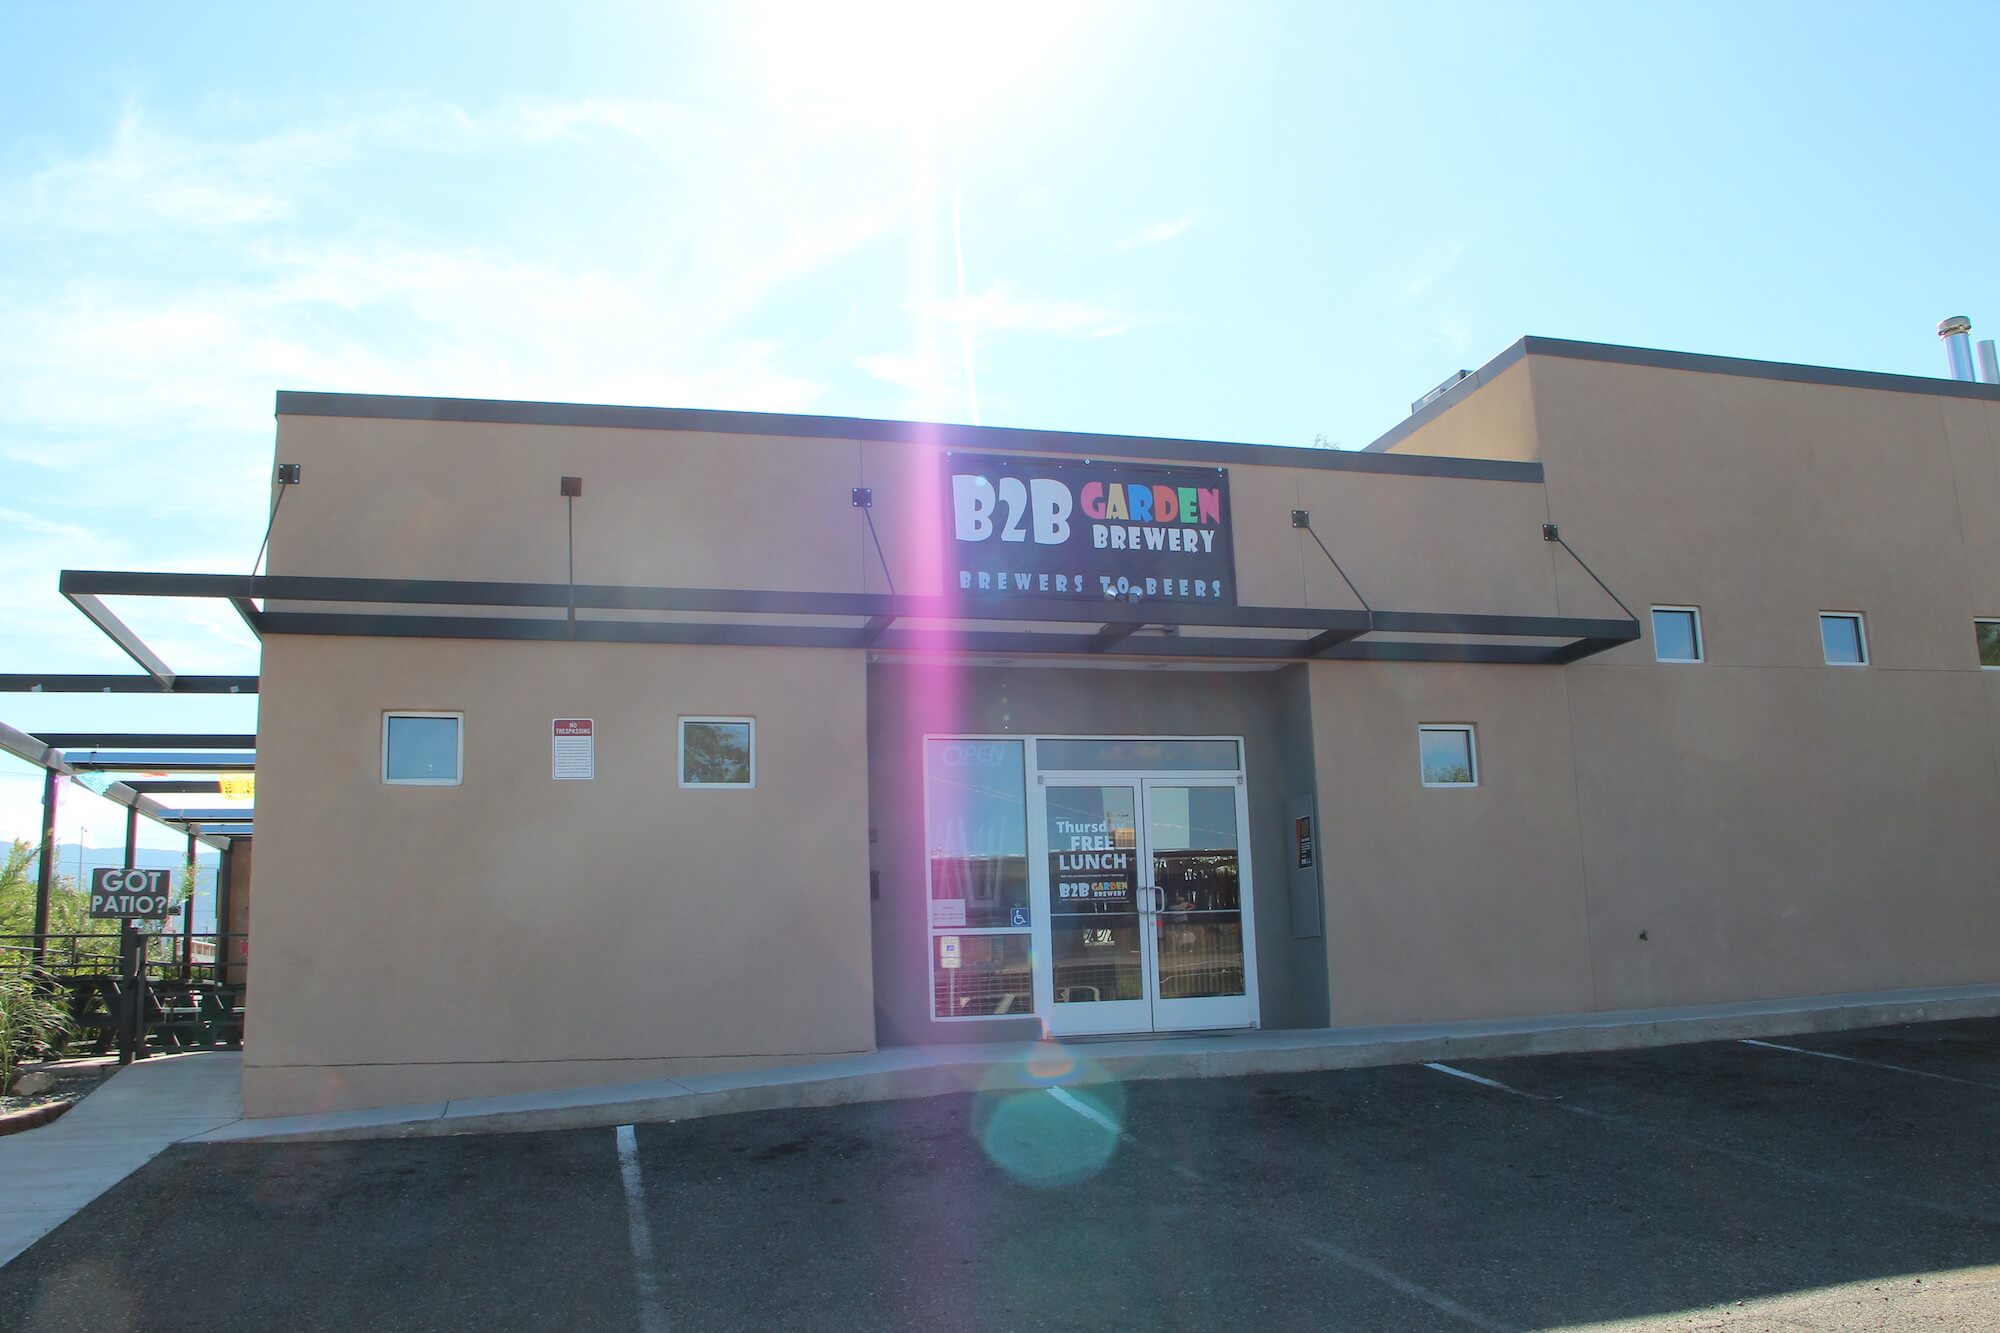 Picture of B2B Garden Brewery 8338 Comanche Rd NE, Albuquerque, NM 87110, United States